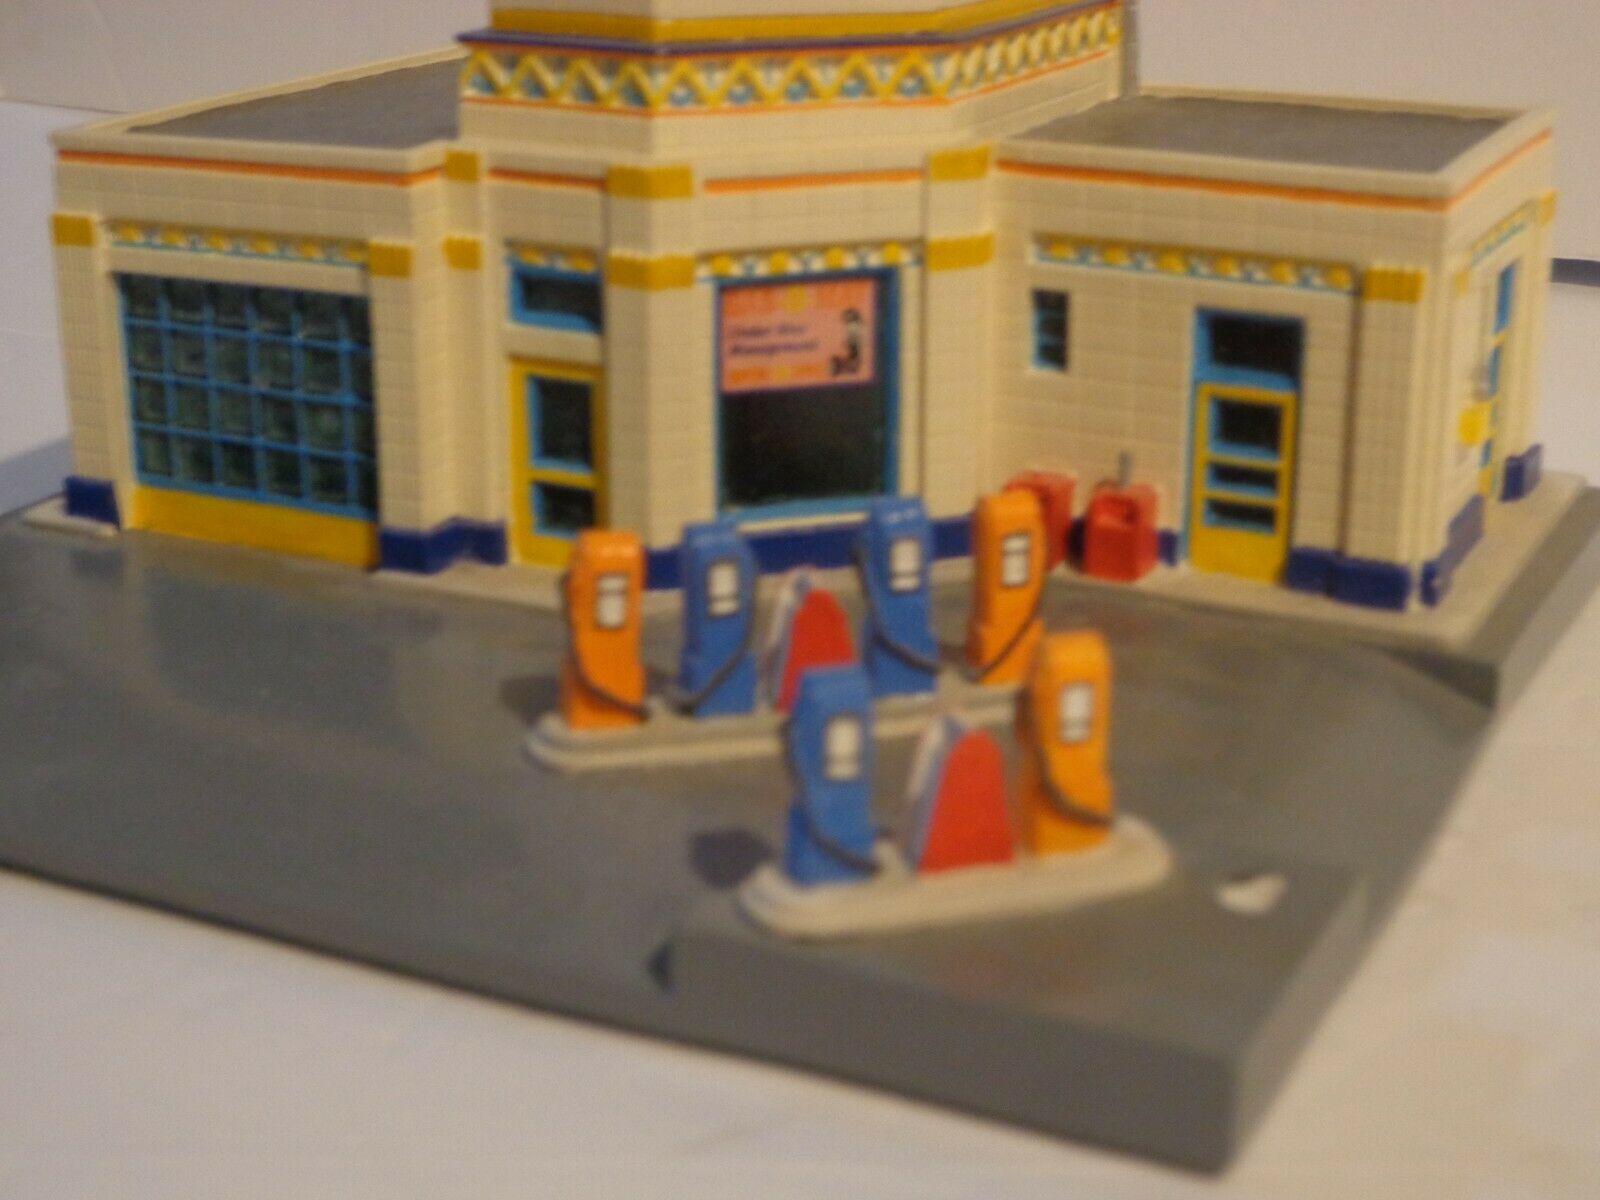 Gas-o-mat Gas Service Station Art Deco 1920s Style Lefton Roadside Usa 1995 Mib